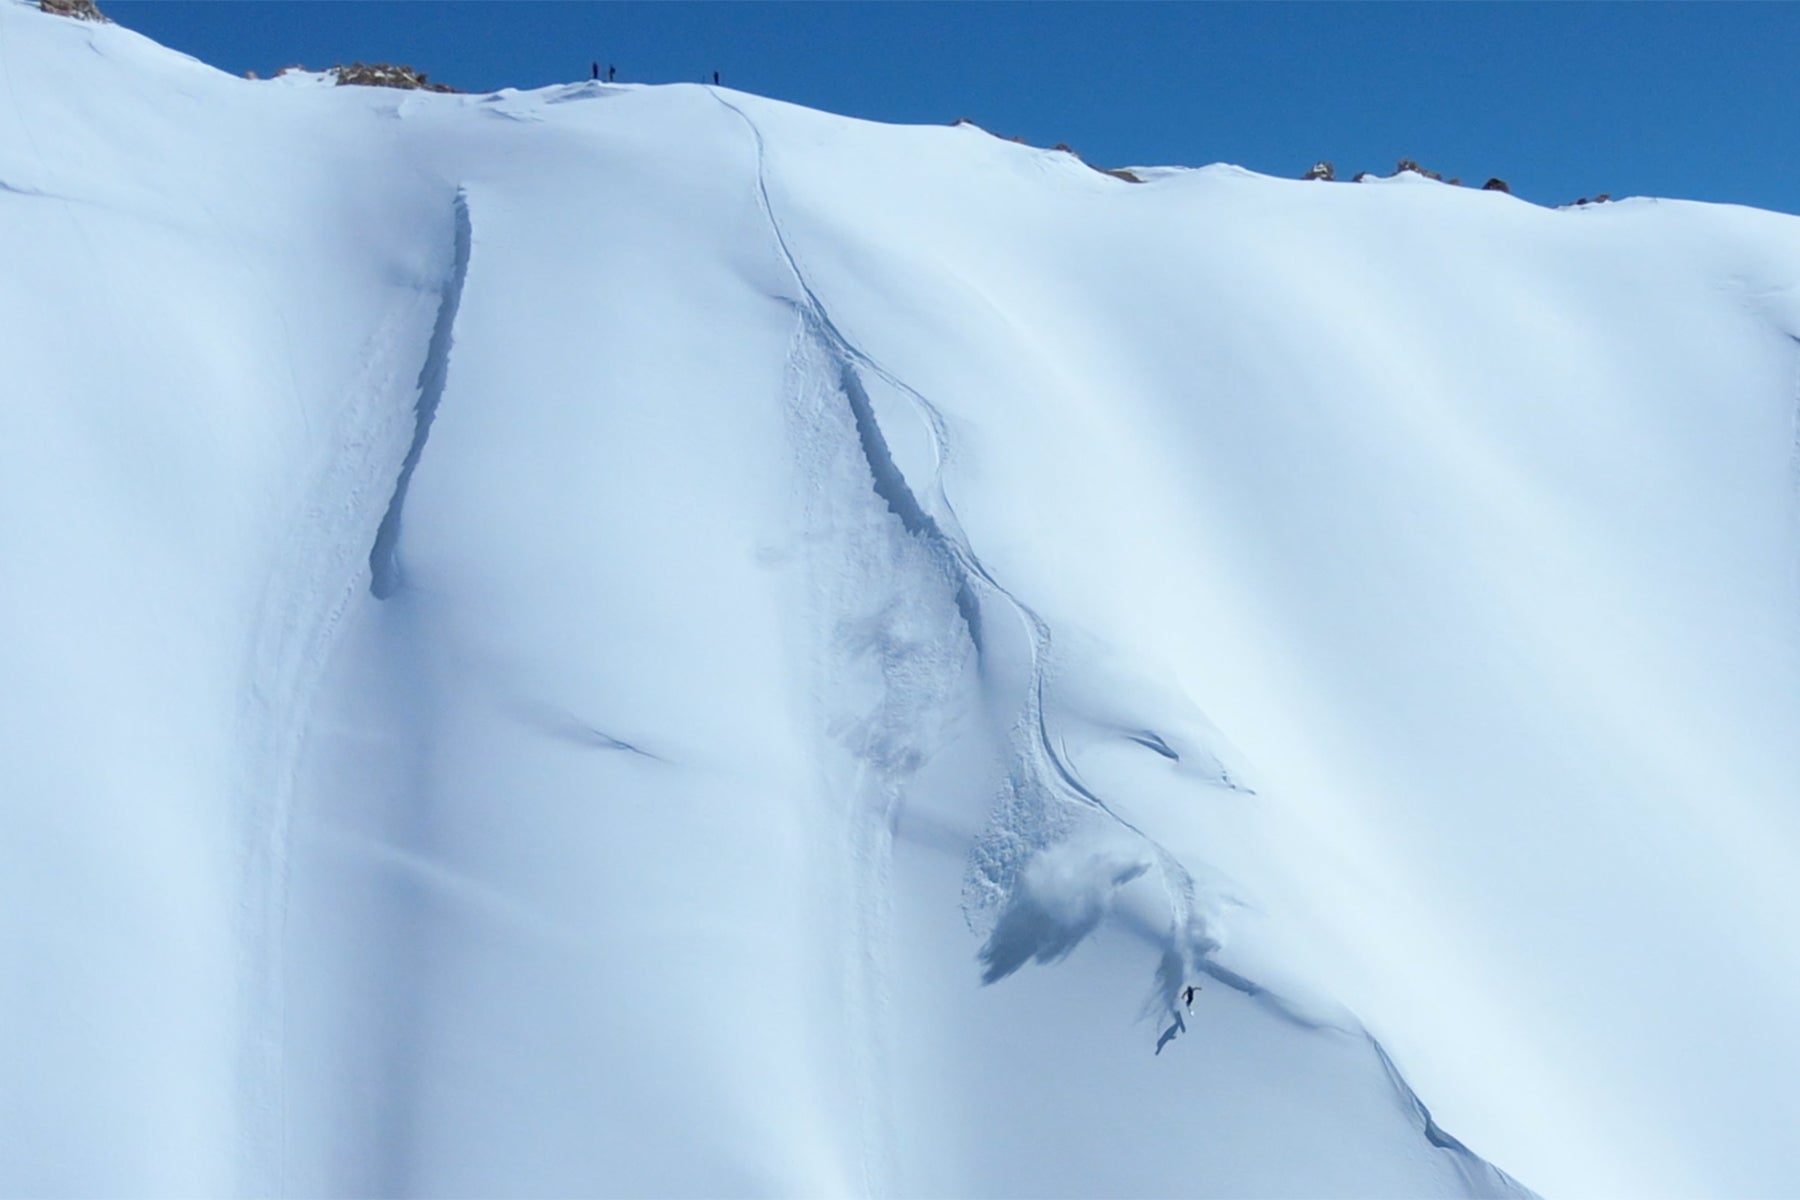 Dorian Densmore Skis Argentina's Record Winter in "Zonda"